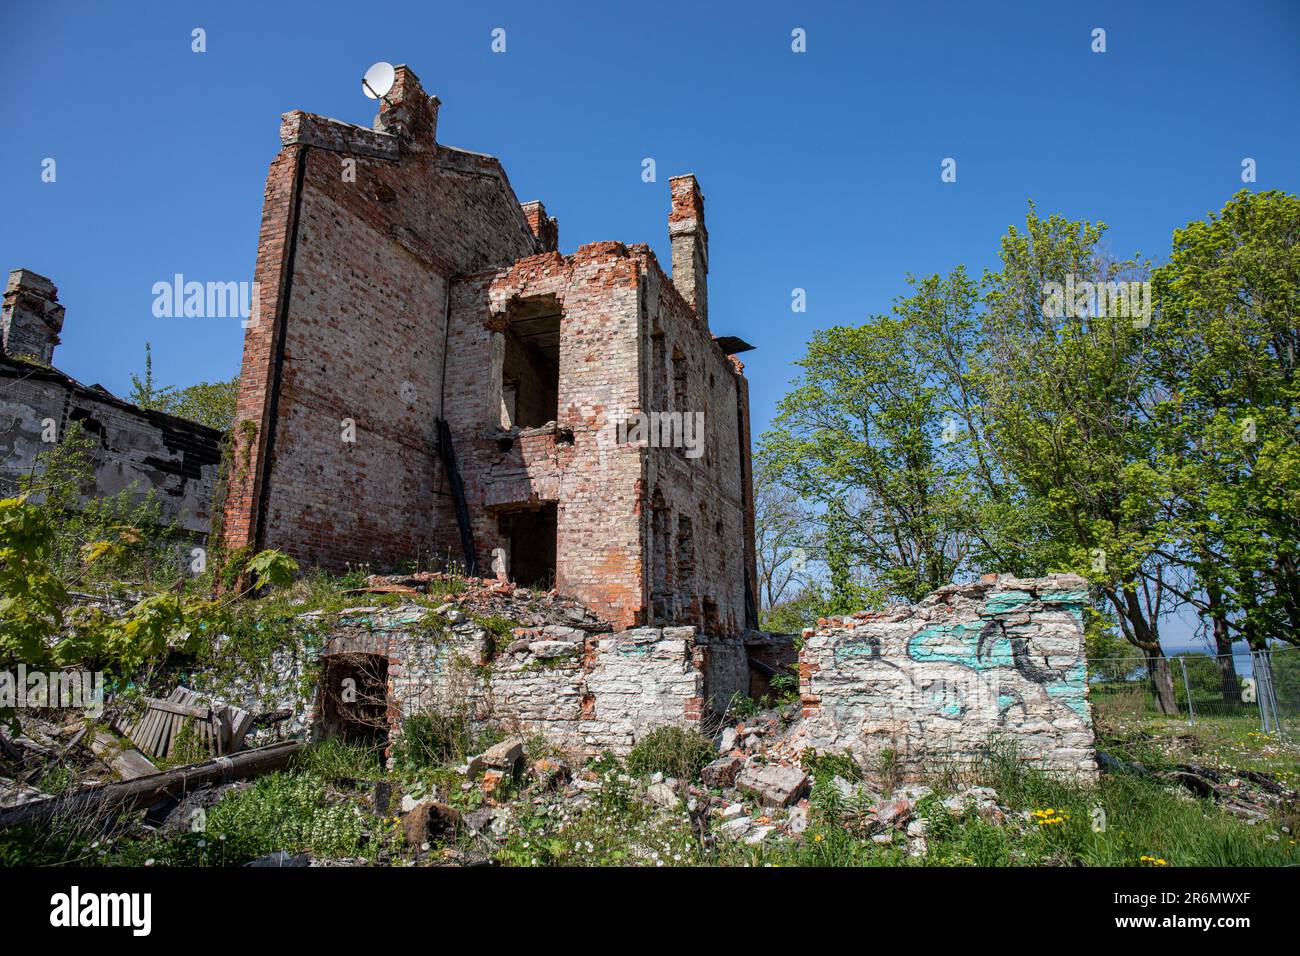 Ruins of an old residential building against clear blue sky at Kopli Lines or Kopli liinid in Tallinn, Estonia Stock Photo